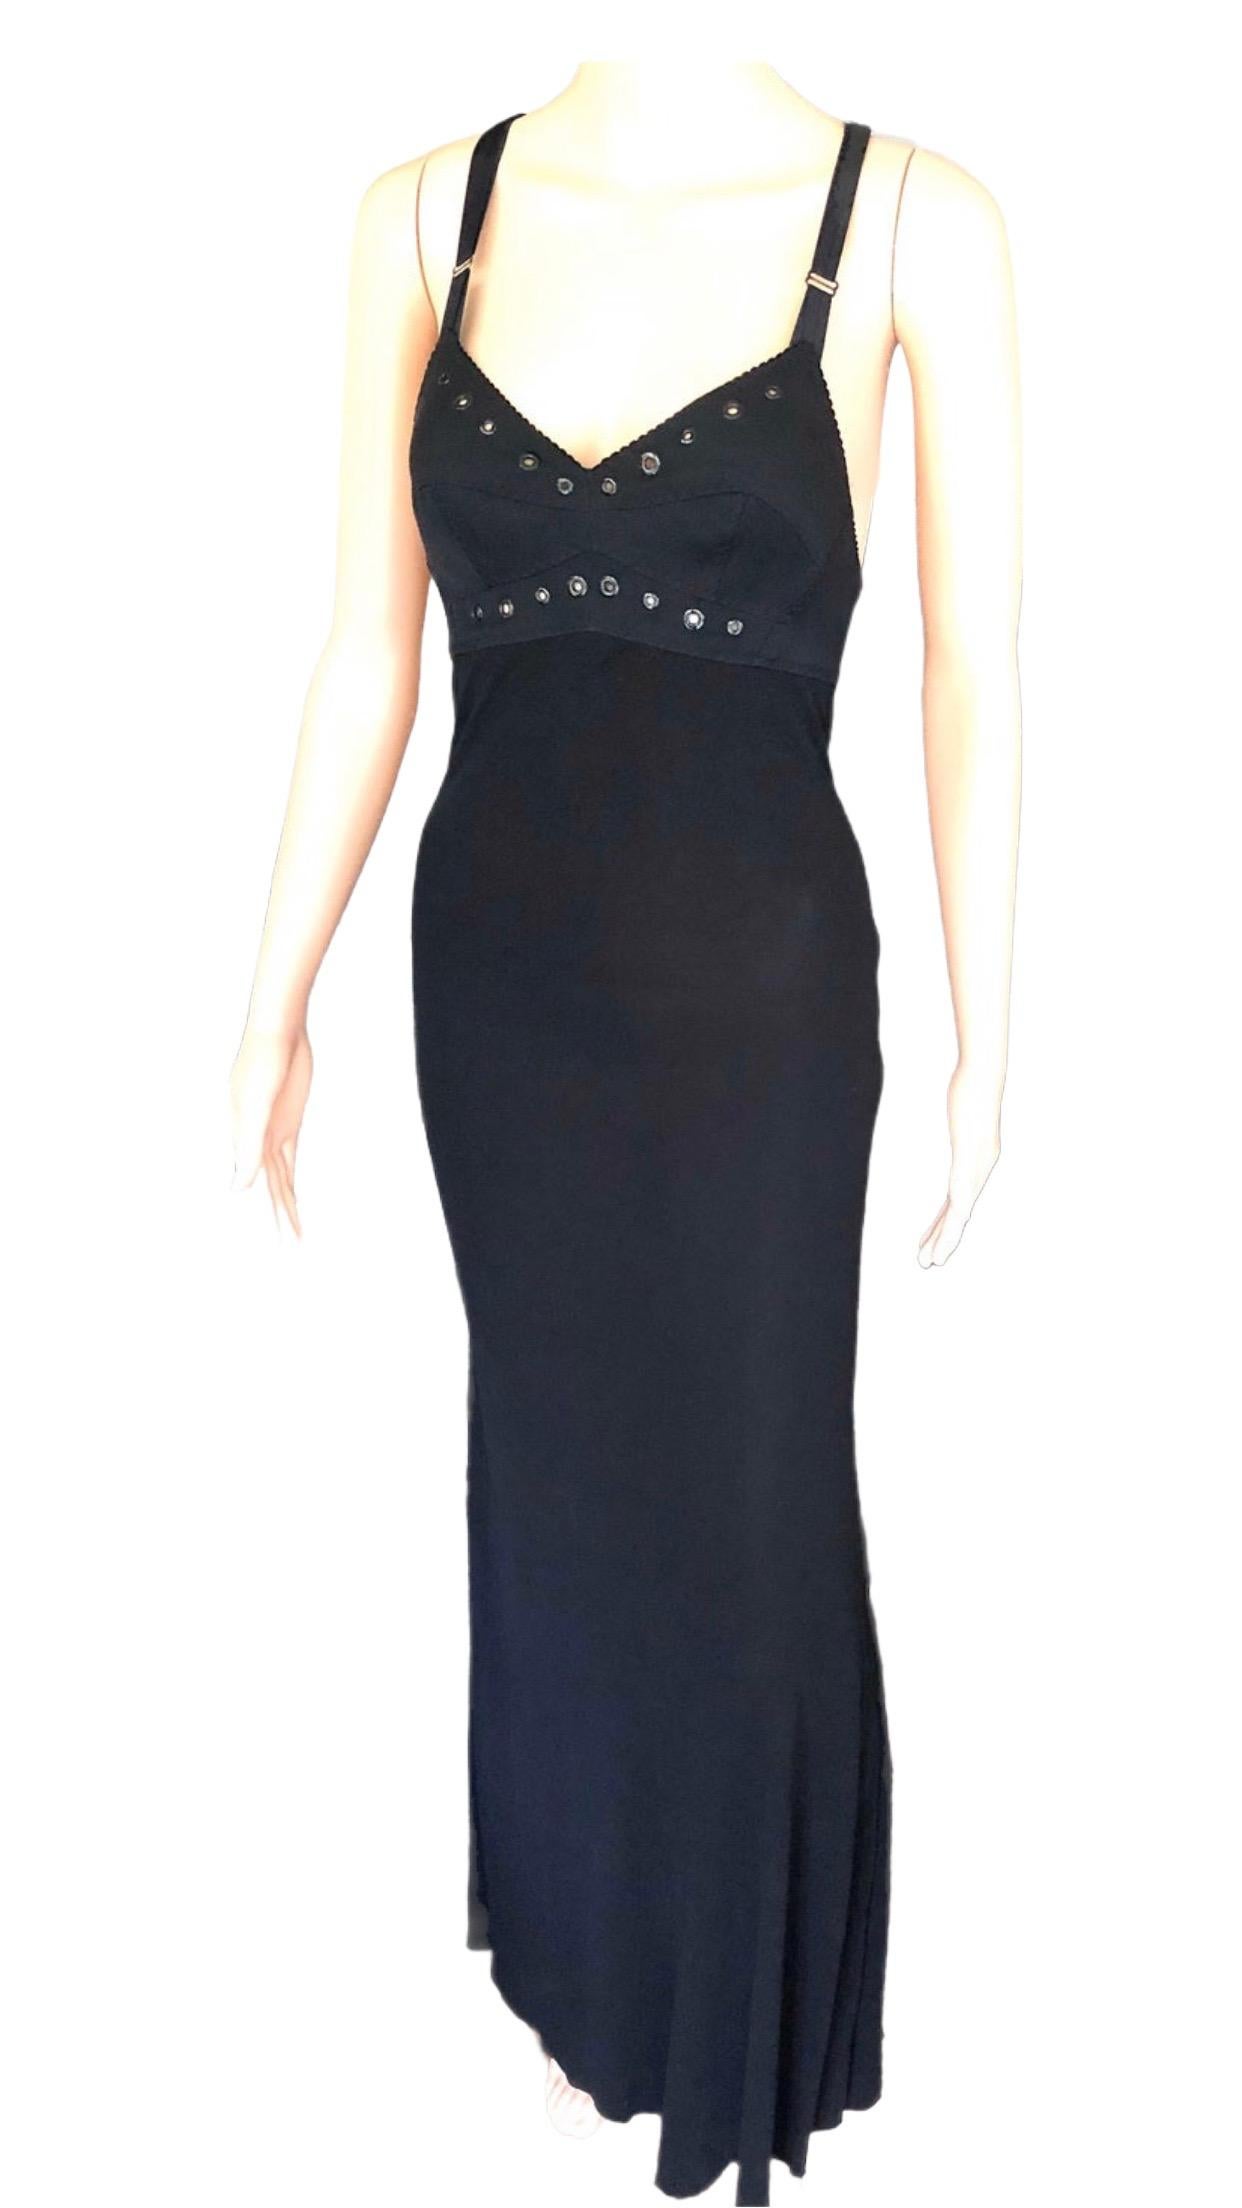 Jean Paul Gaultier Semi-Sheer Cutout Back Grommet Accented Bust Black Dress For Sale 6